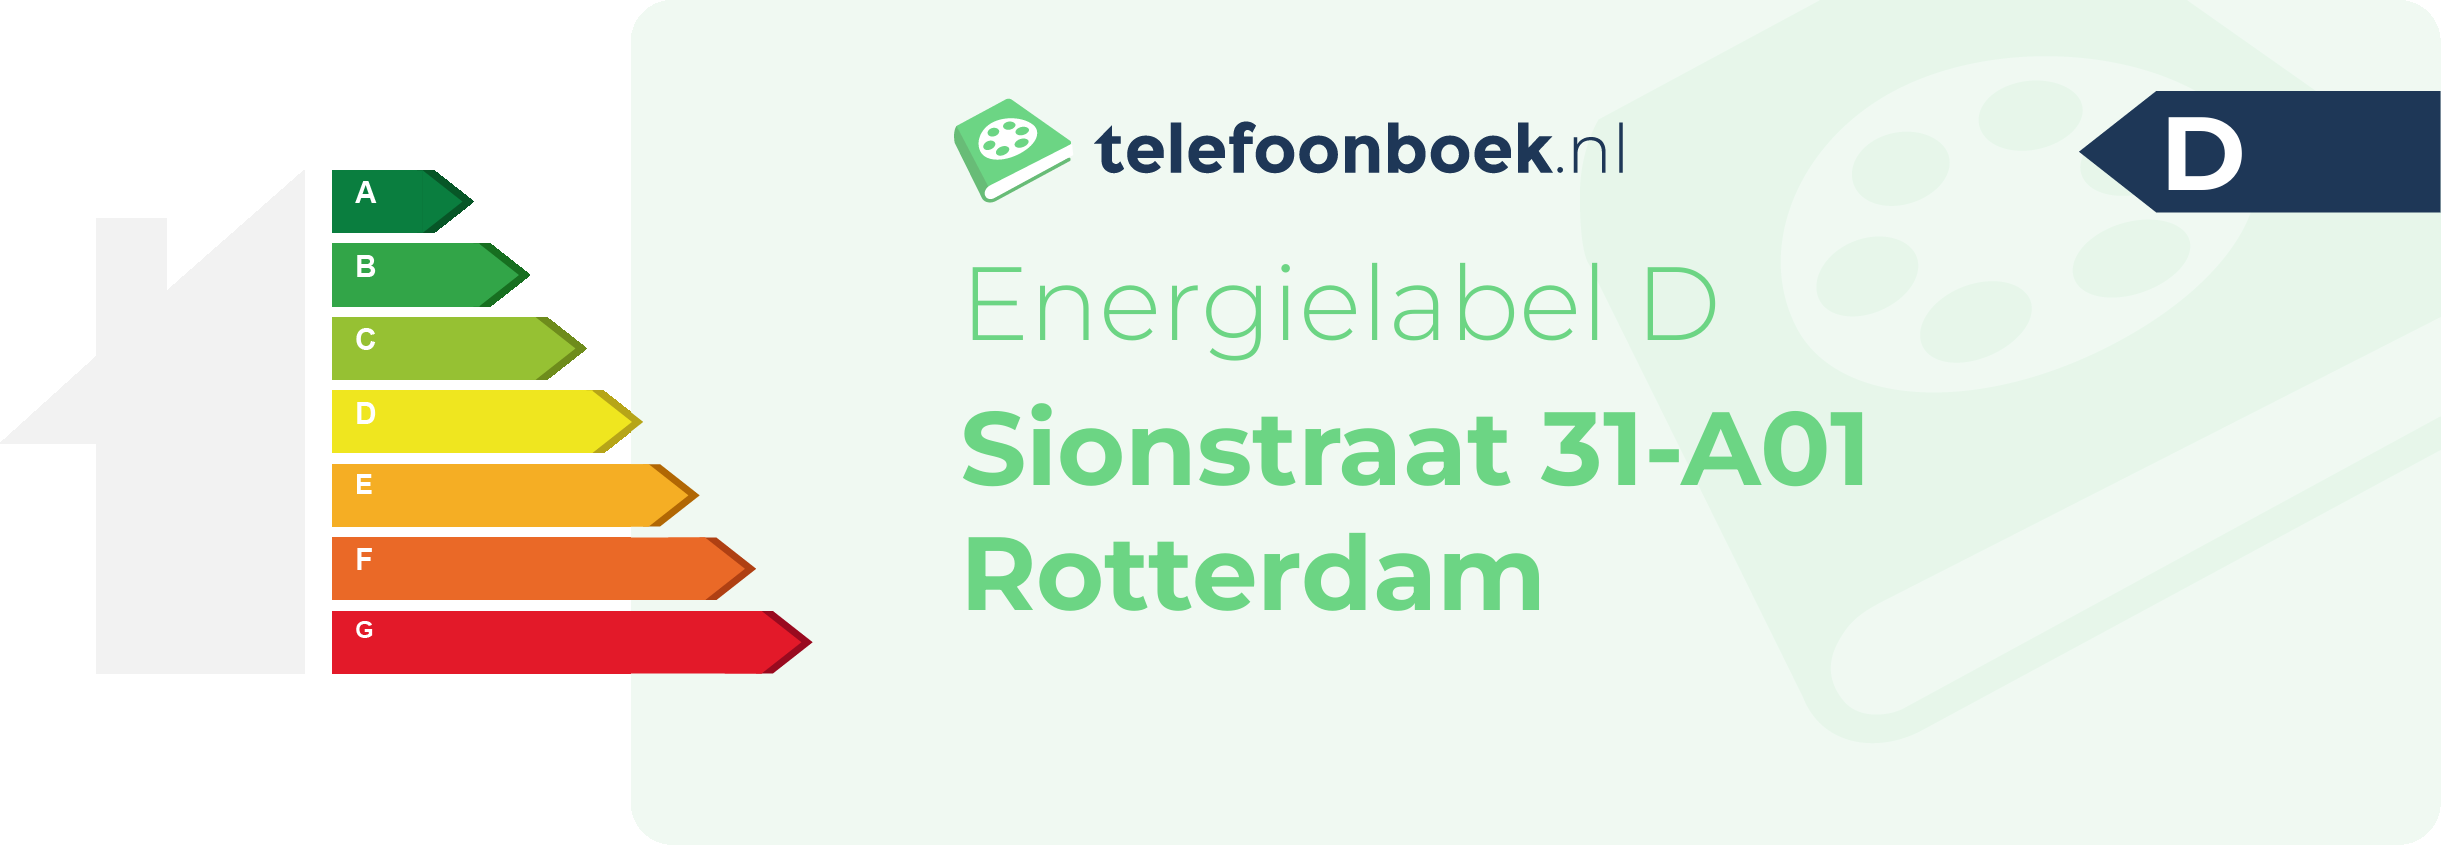 Energielabel Sionstraat 31-A01 Rotterdam